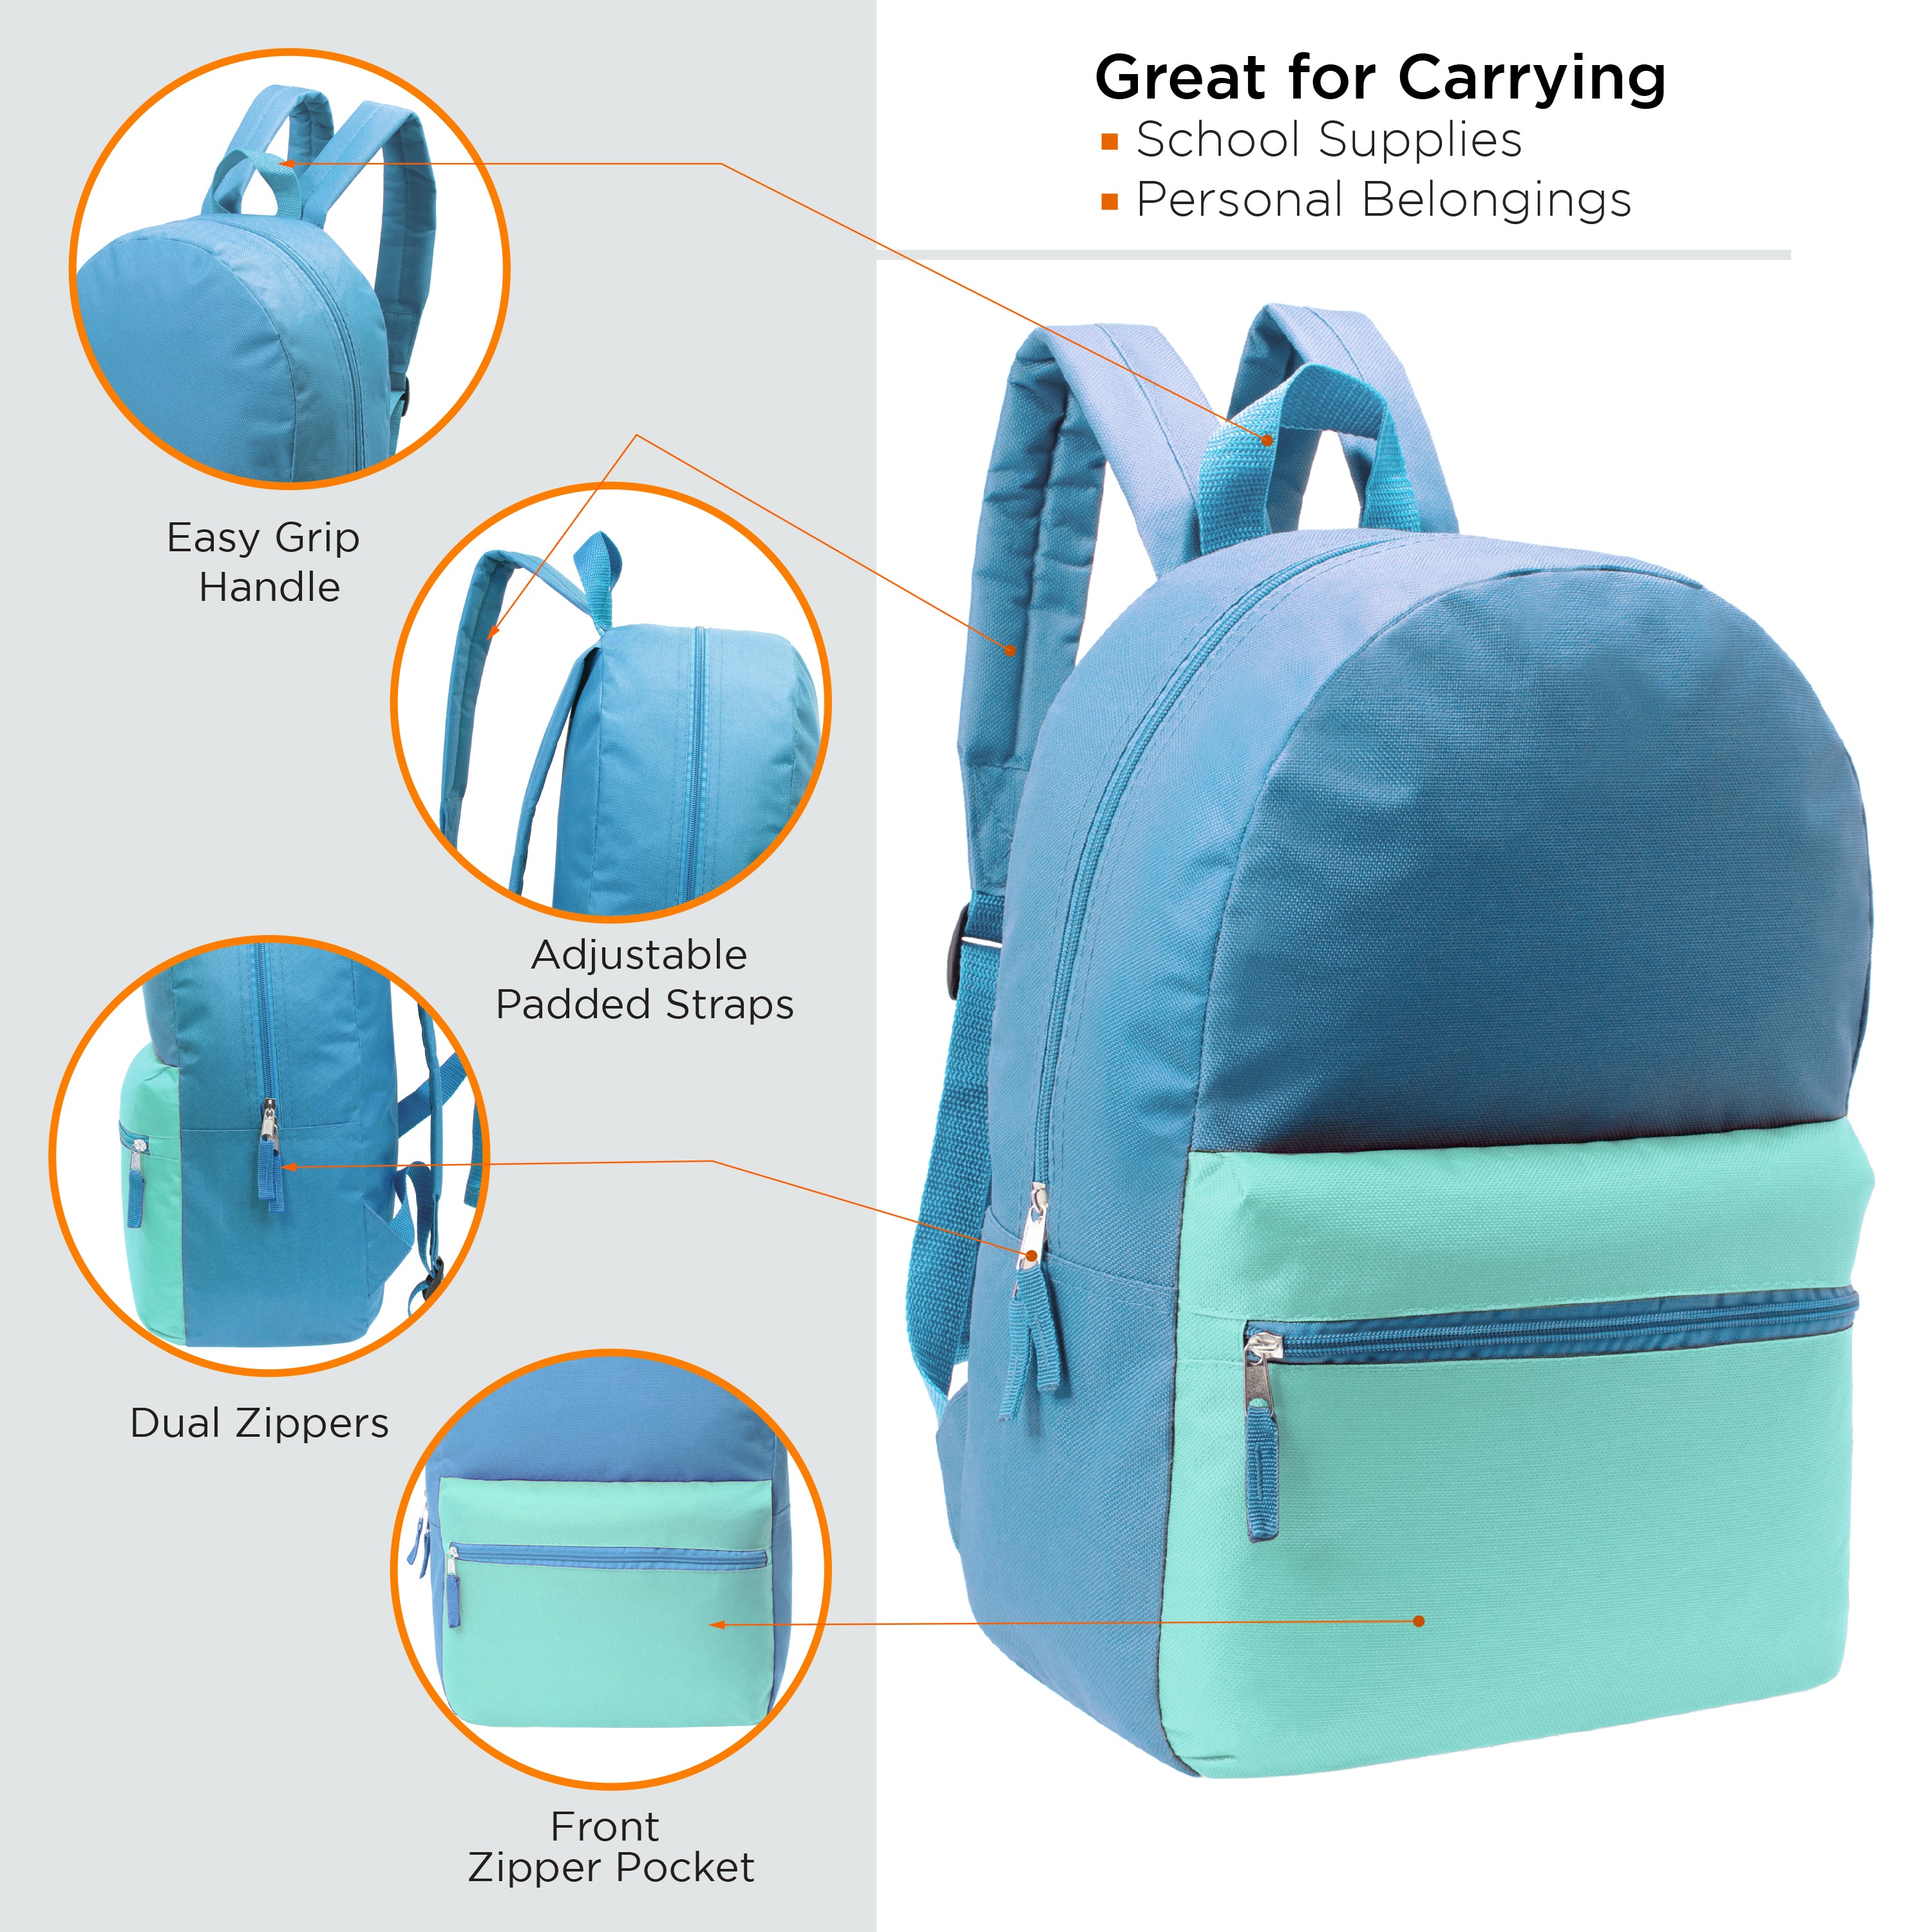 17" Kids Basic Wholesale Backpack in 12 Colors 2 Tone - Bulk Case of 24 Backpacks